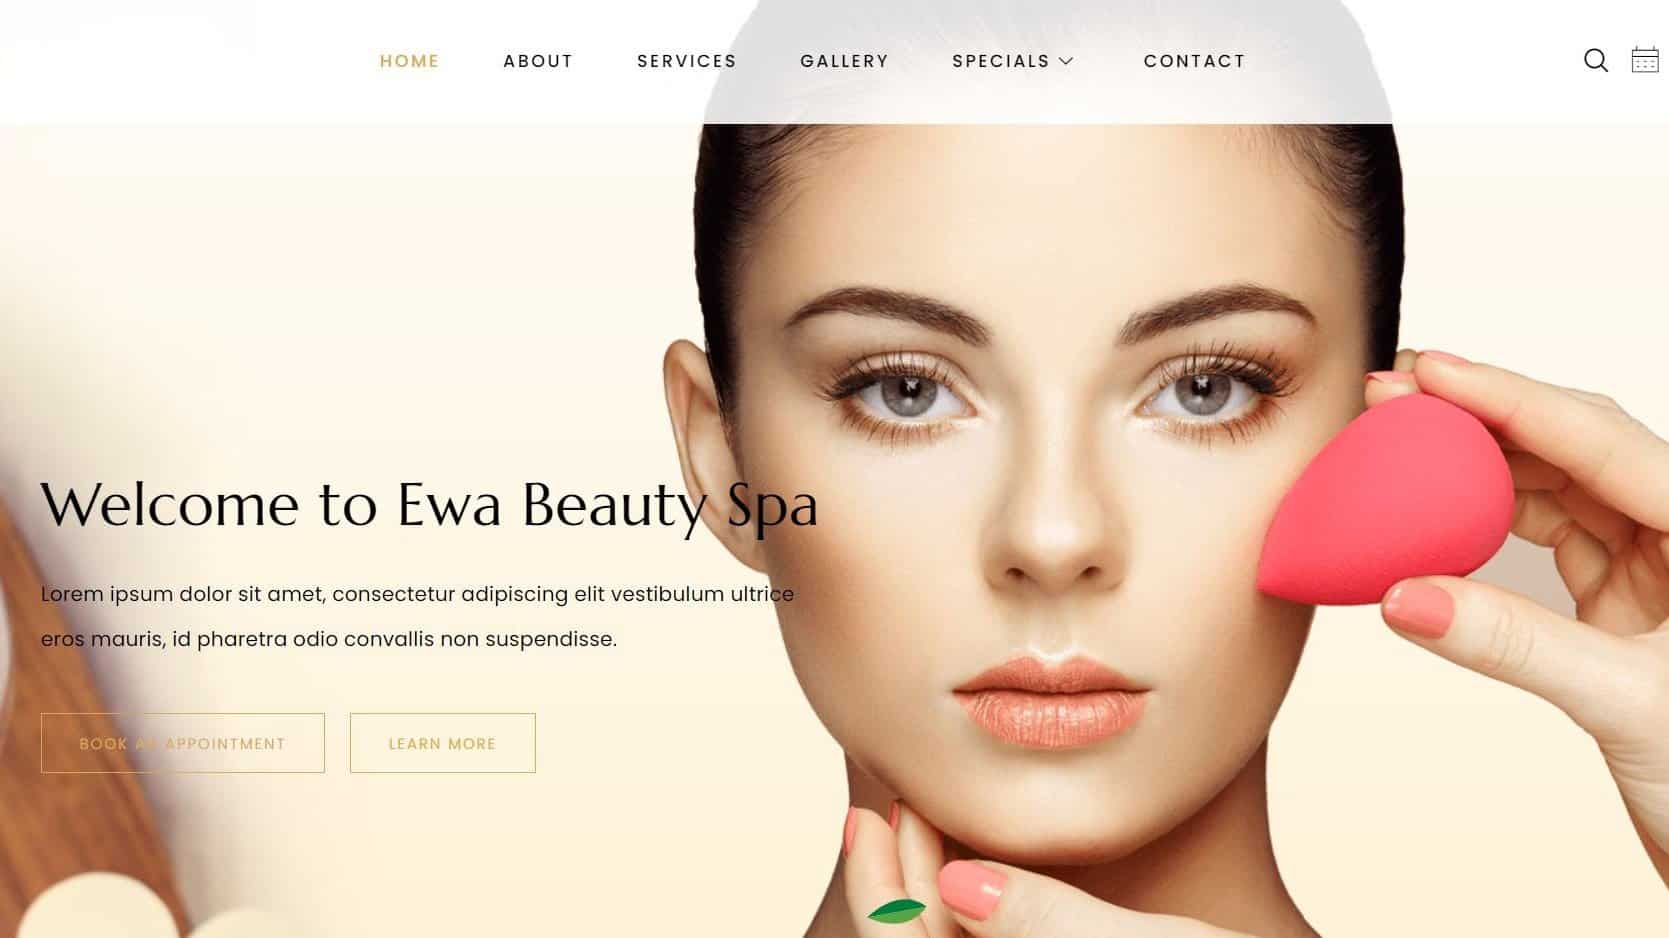 Welcome to Ewa Beauty Spa